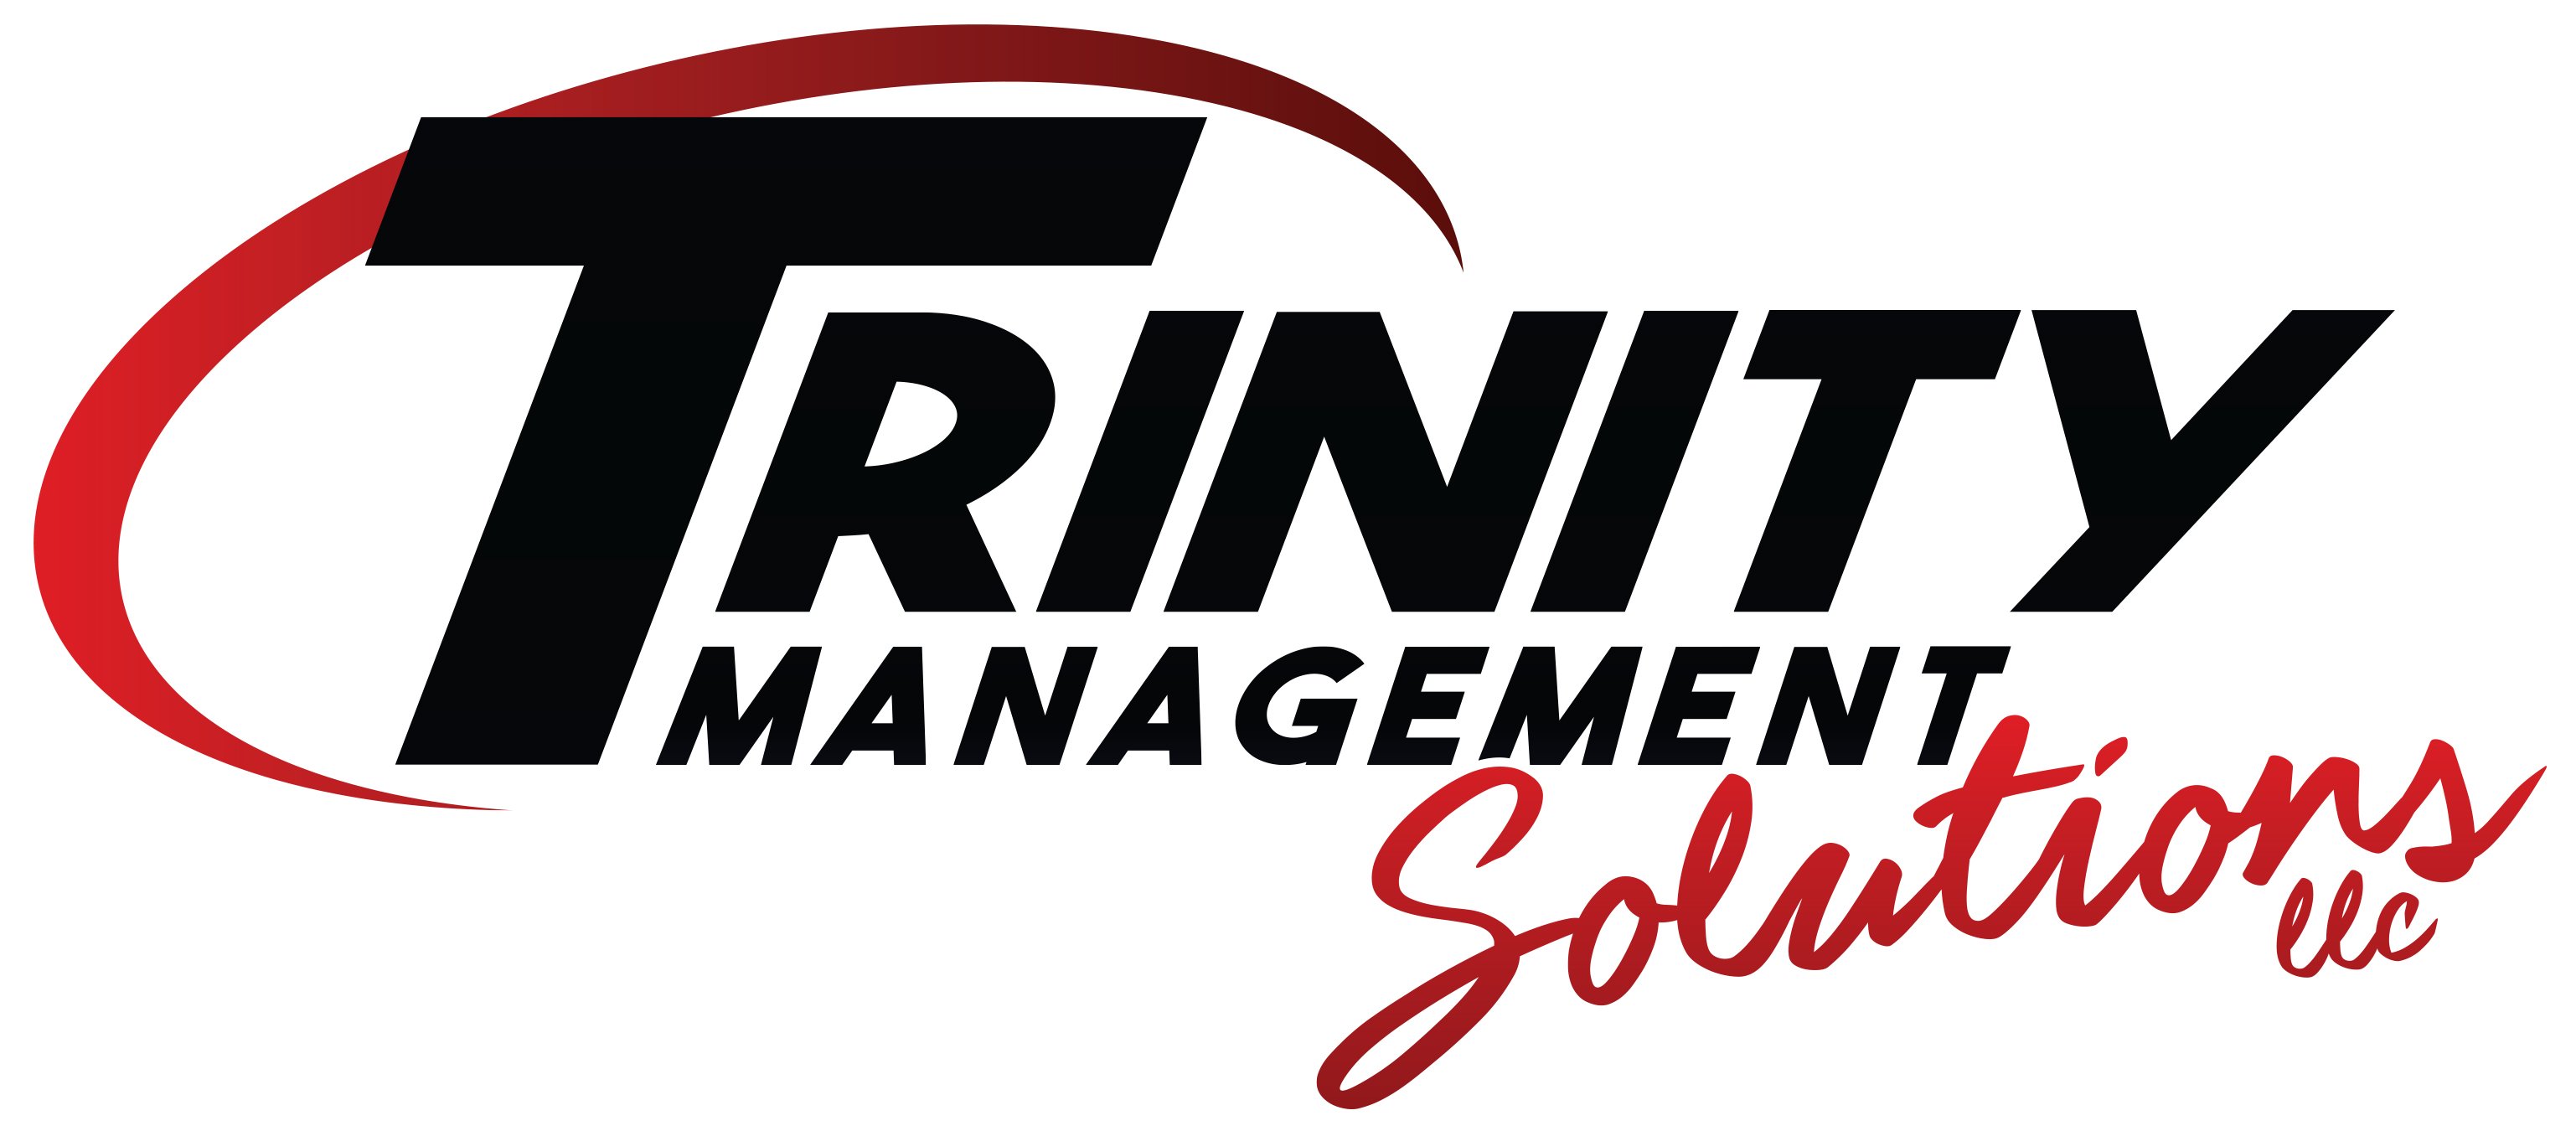 Trinity Management Solutions Logo